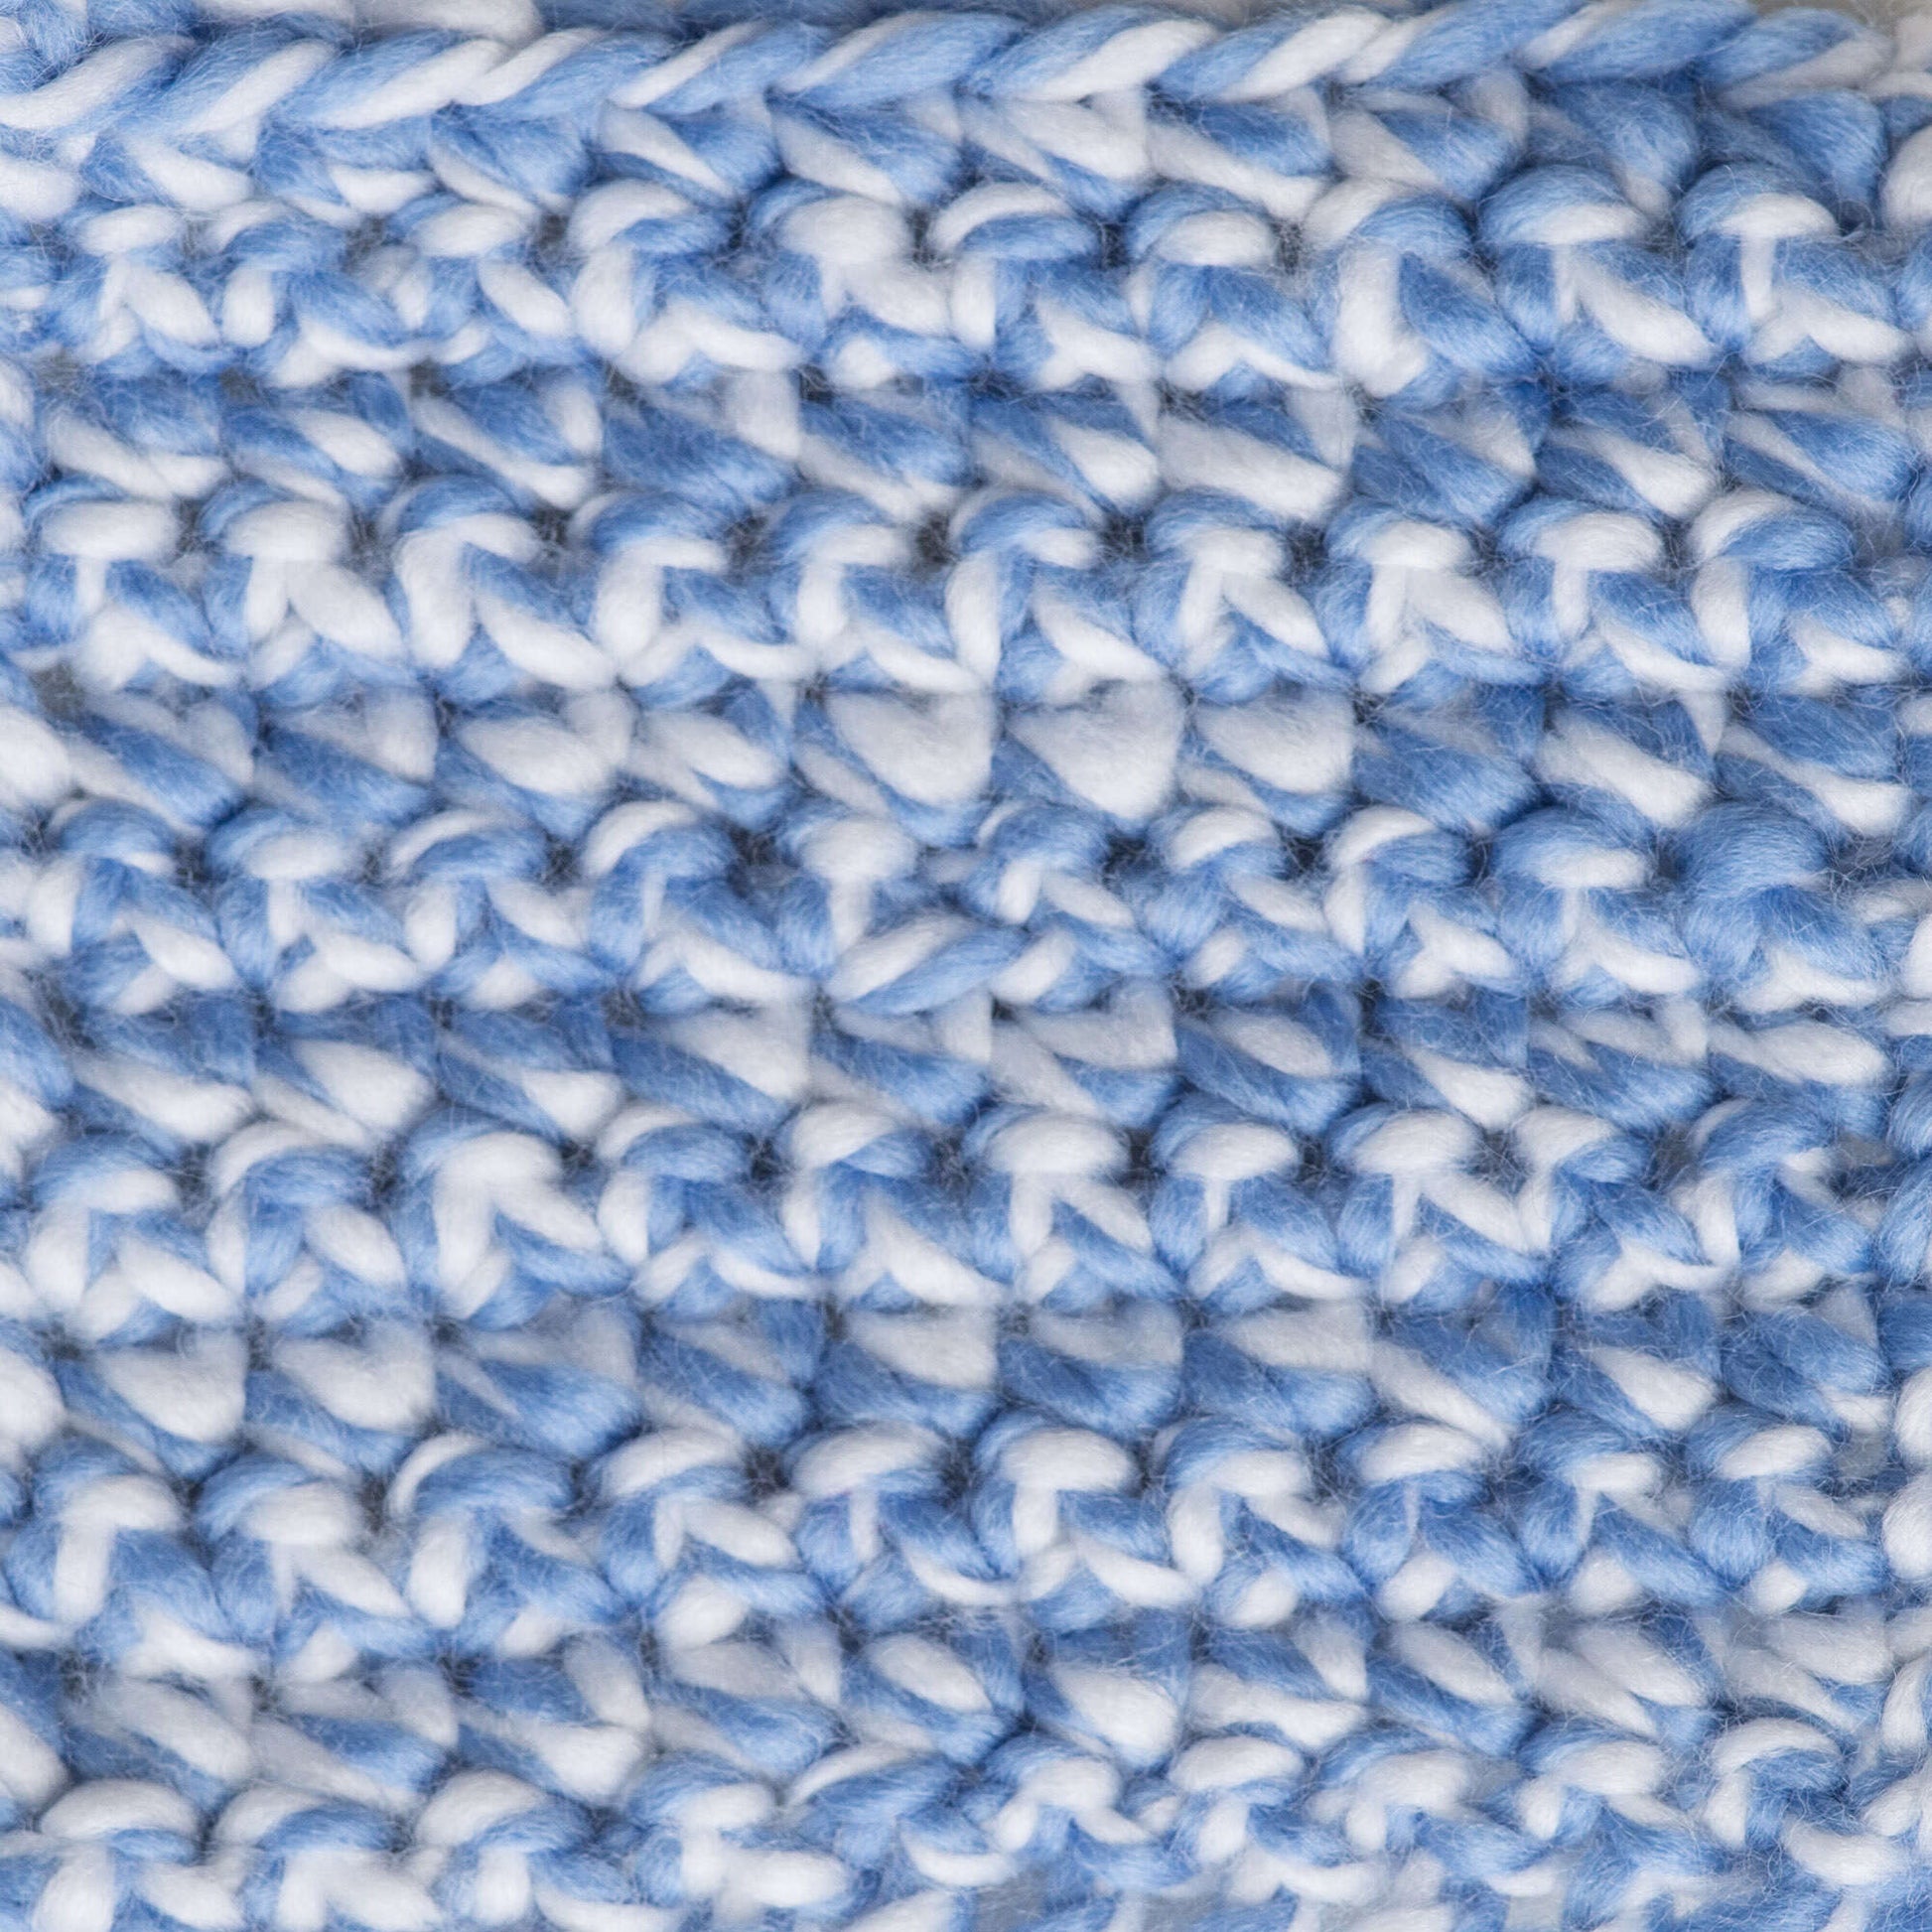 Patons Beehive Baby Chunky Yarn - Discontinued Shades Blue Marl